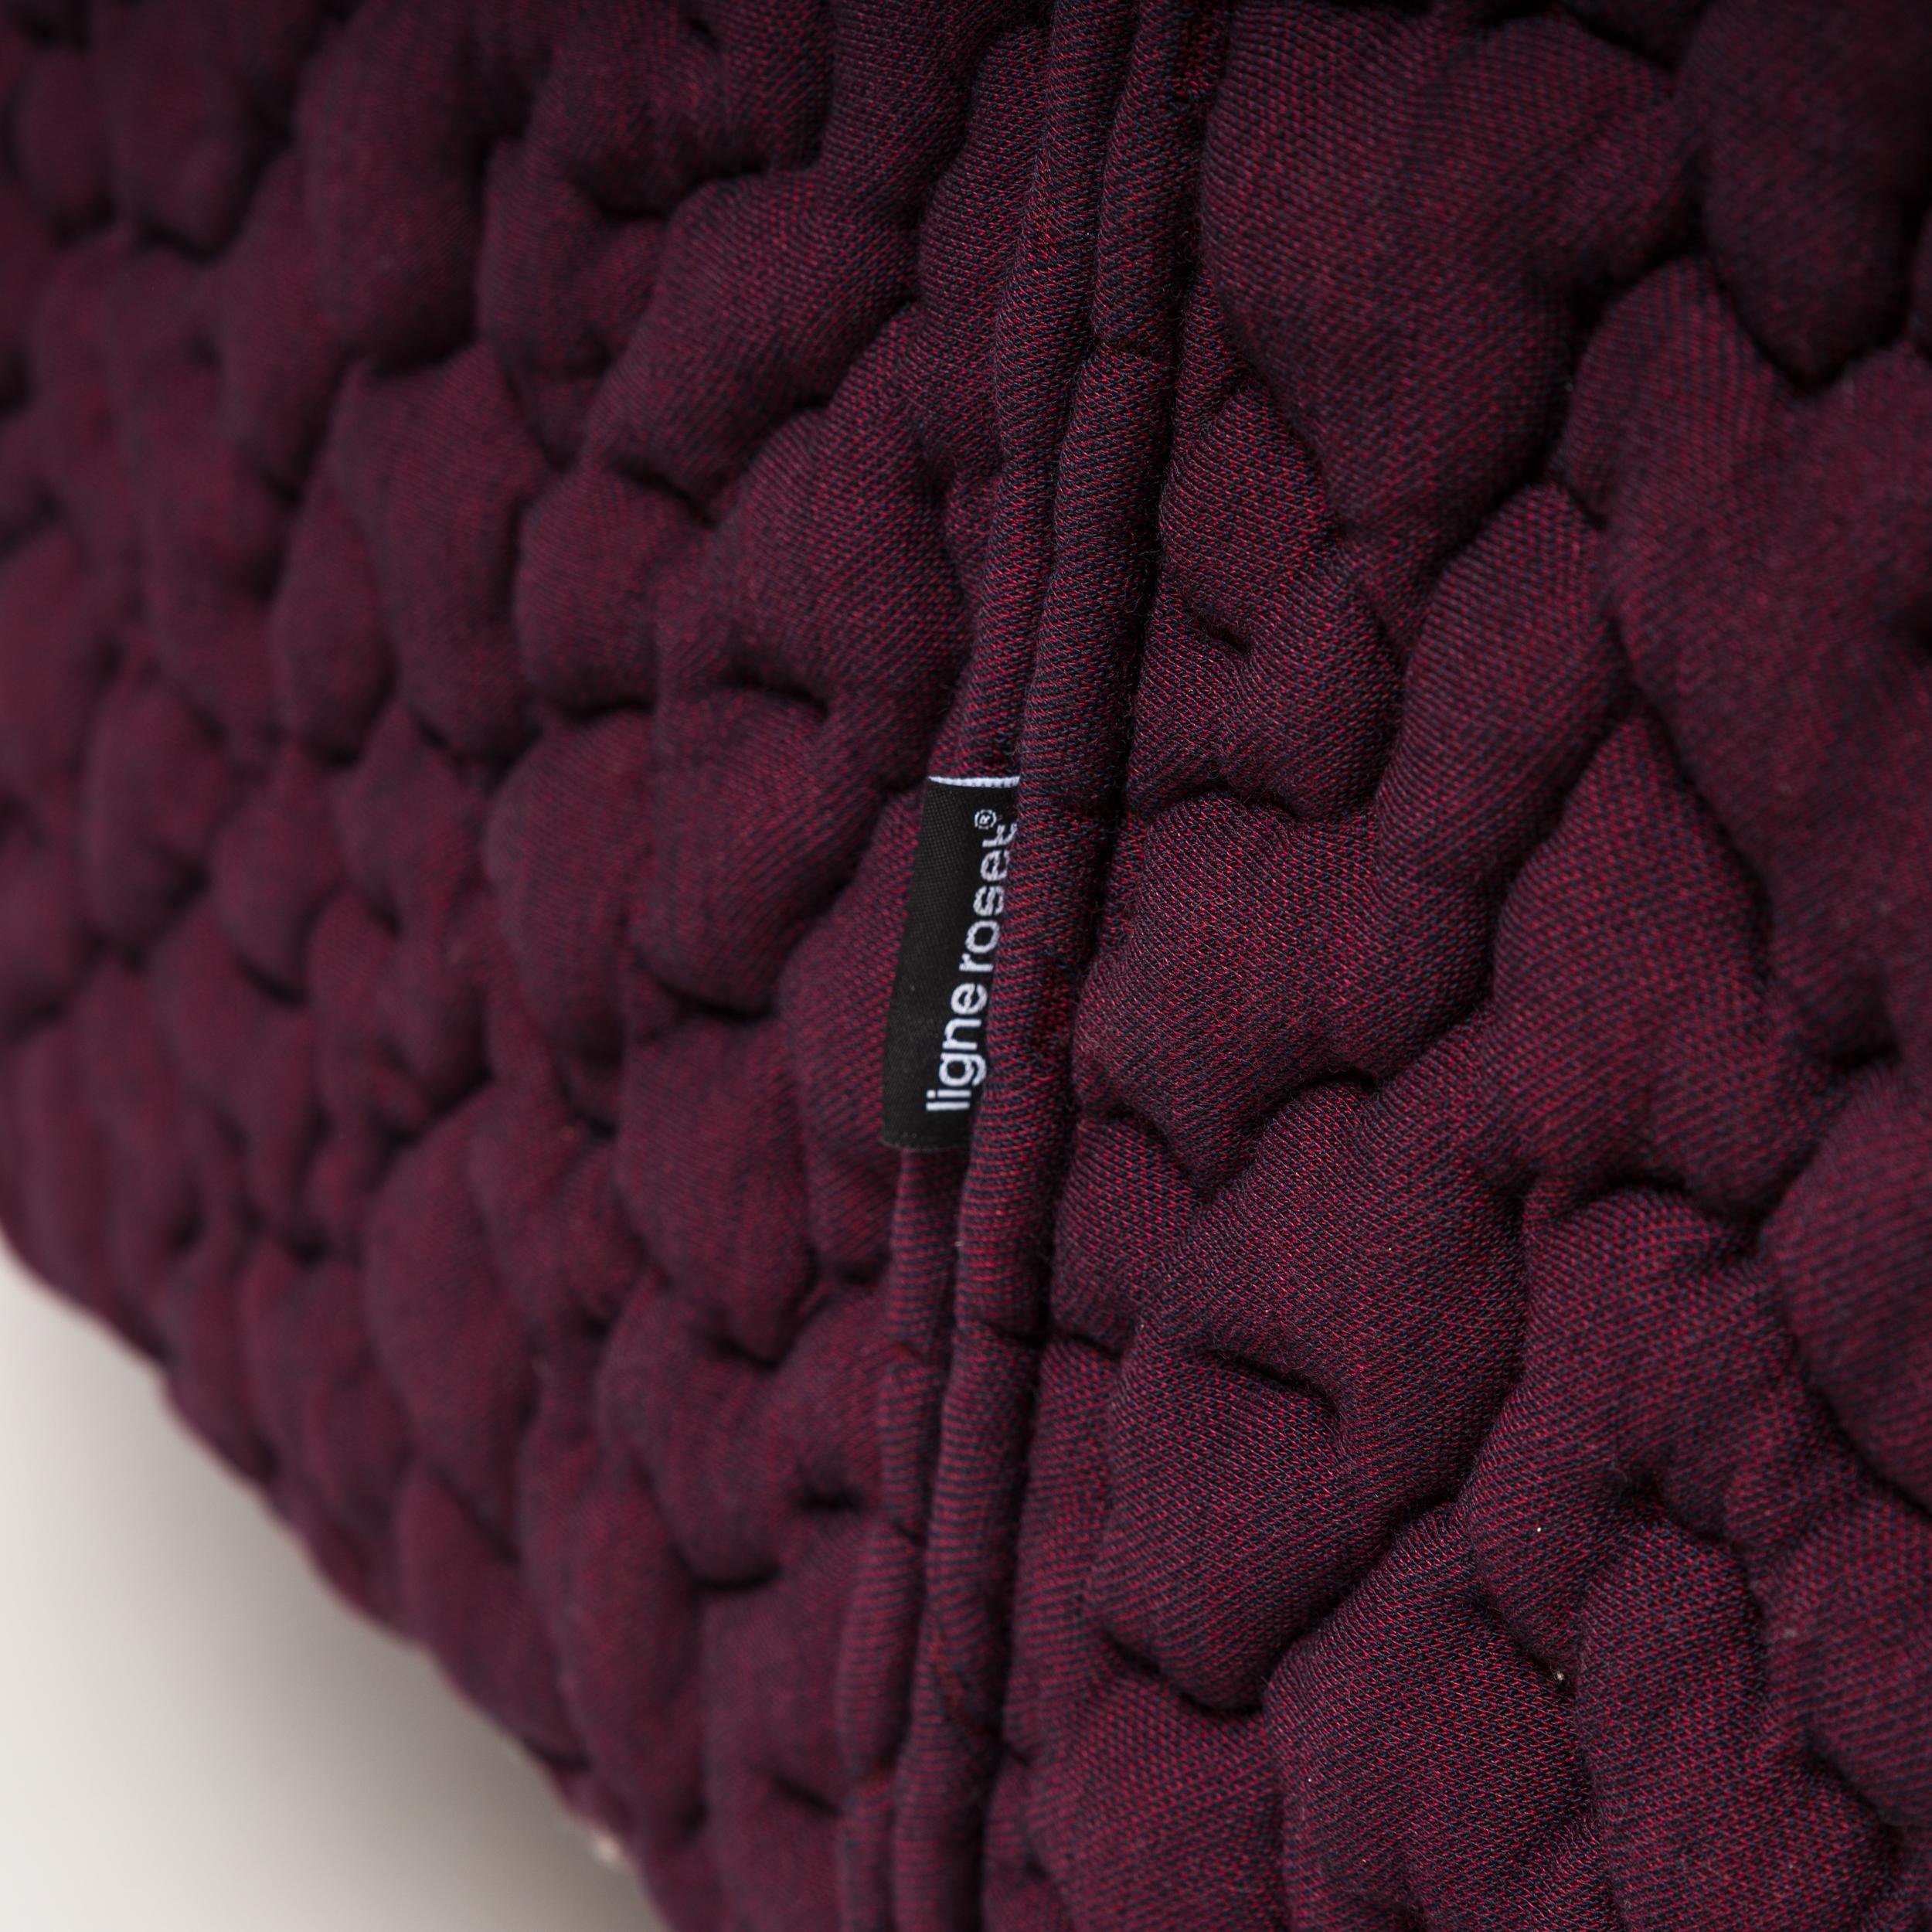 Fabric Ligne Roset by Erwan & Ronan Bouroullec Ploum High Back Purple Sofa